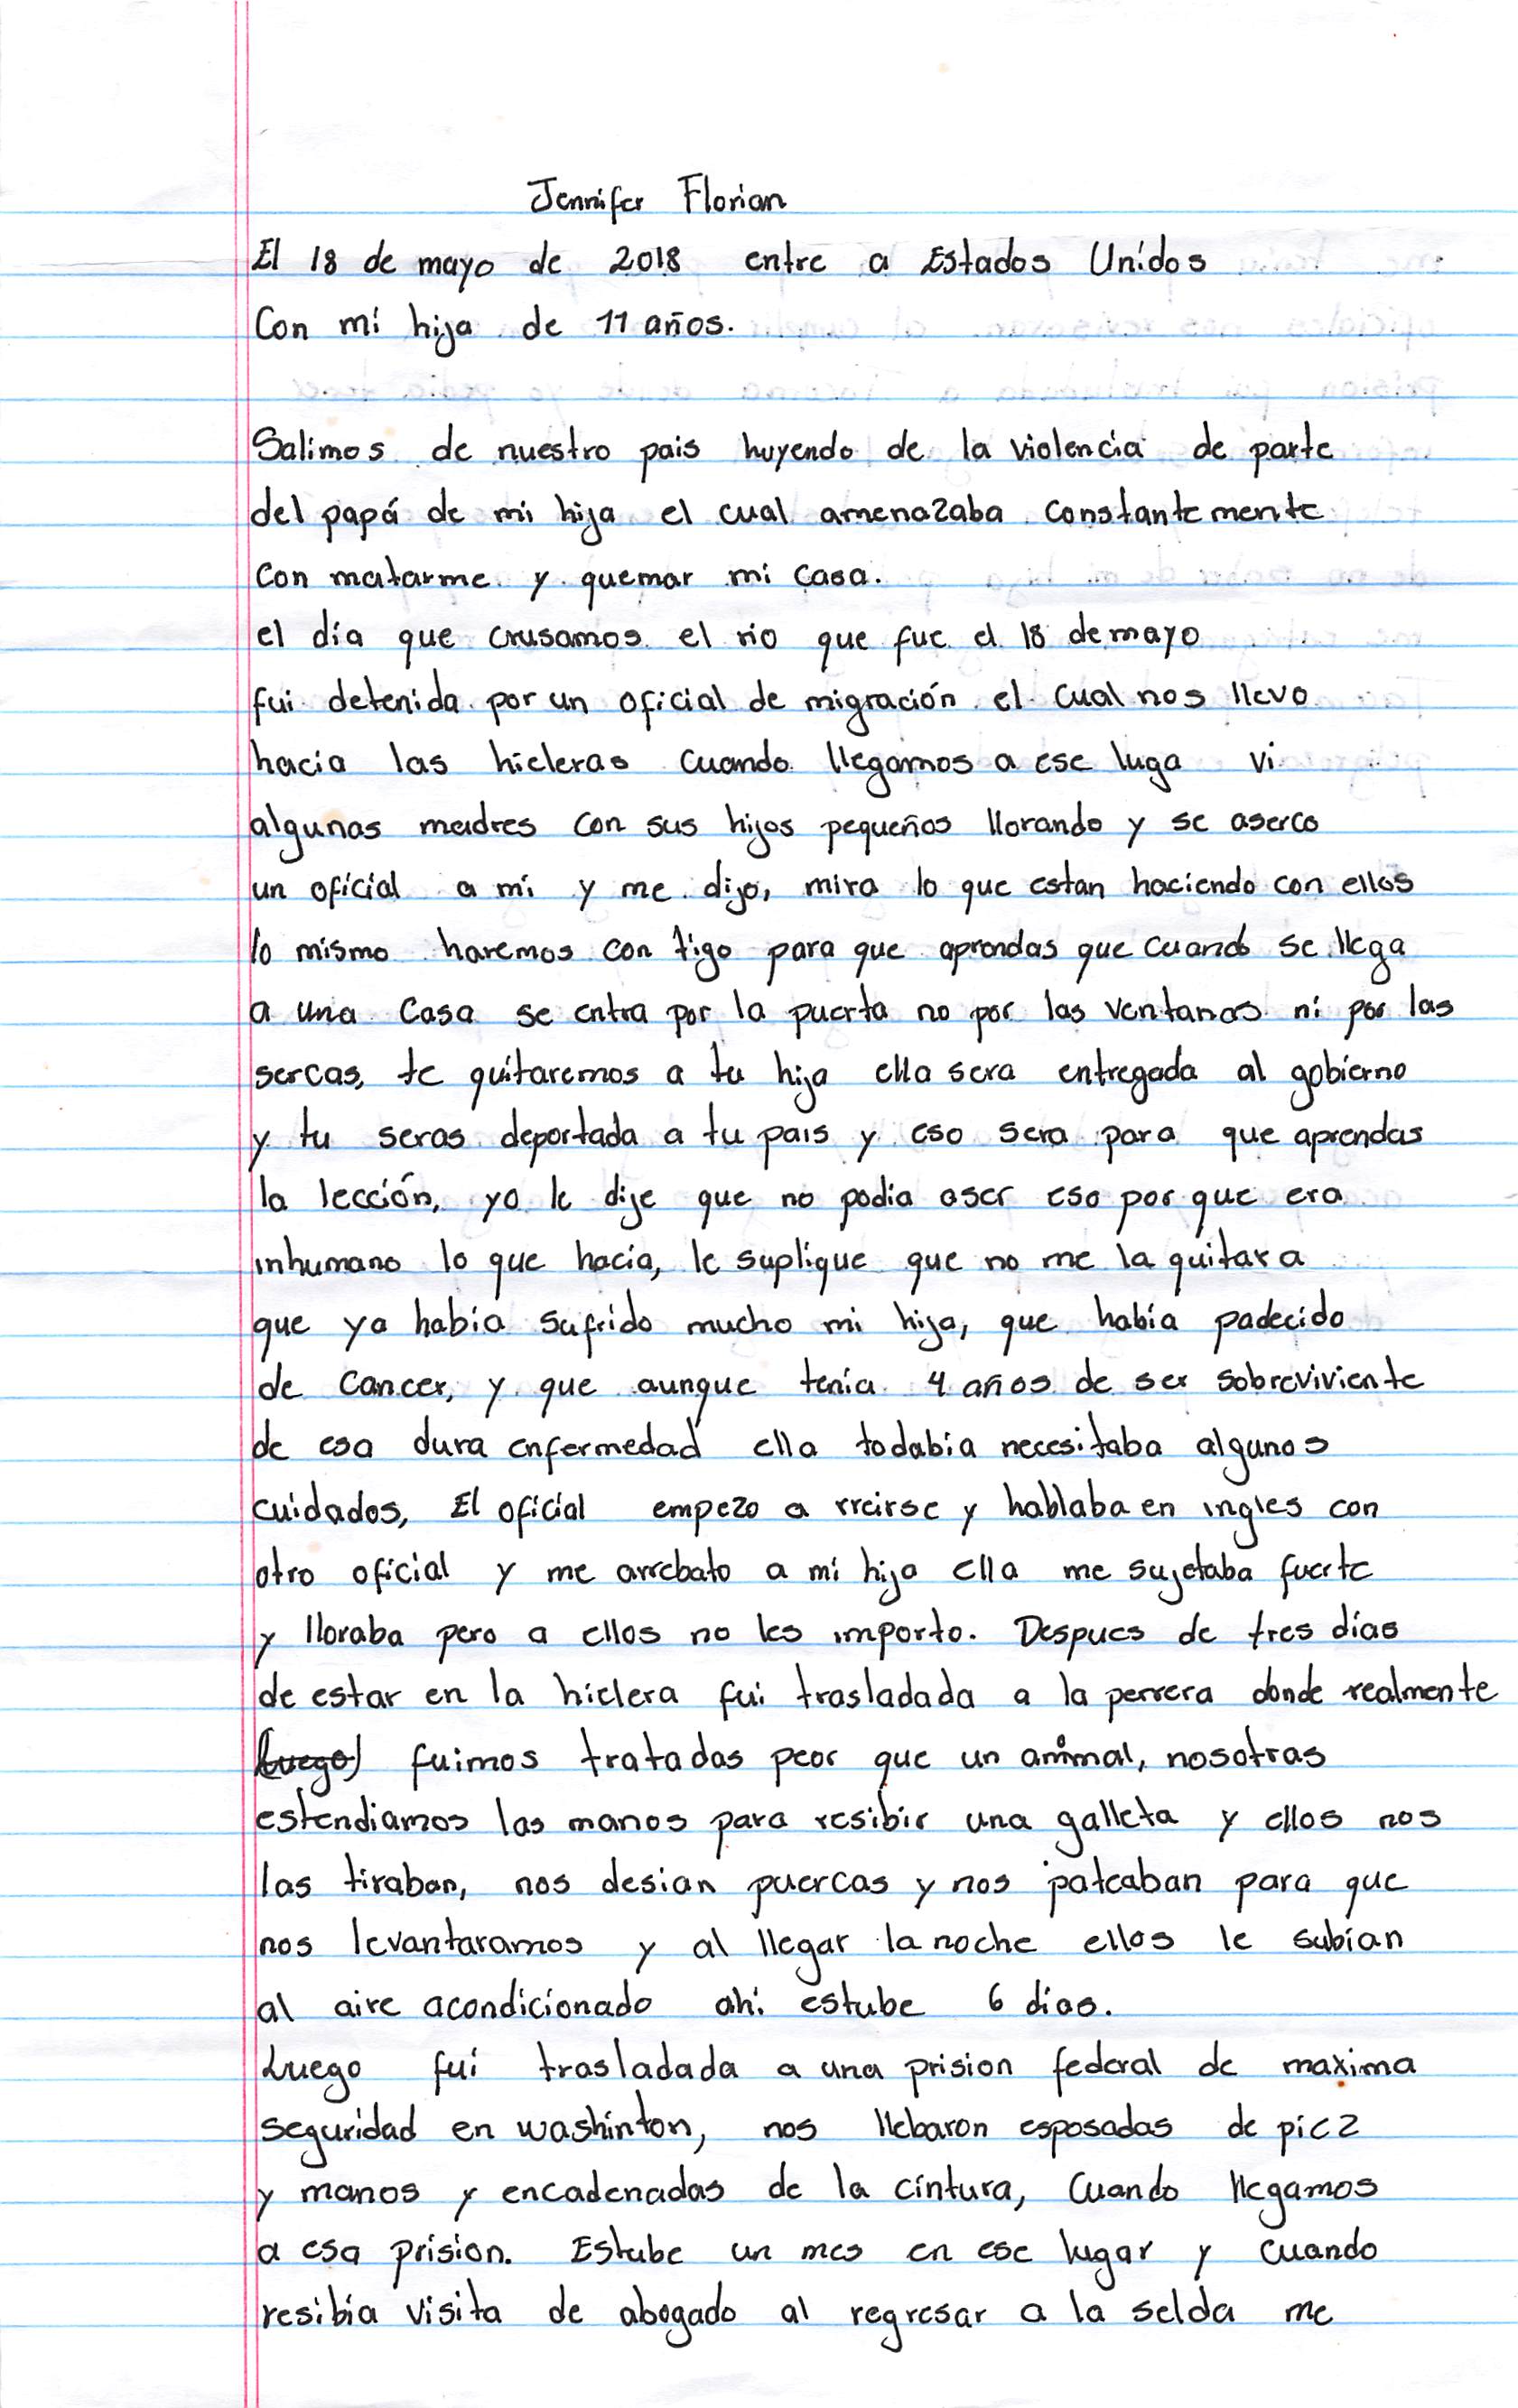 Luciana's Handwritten Letter